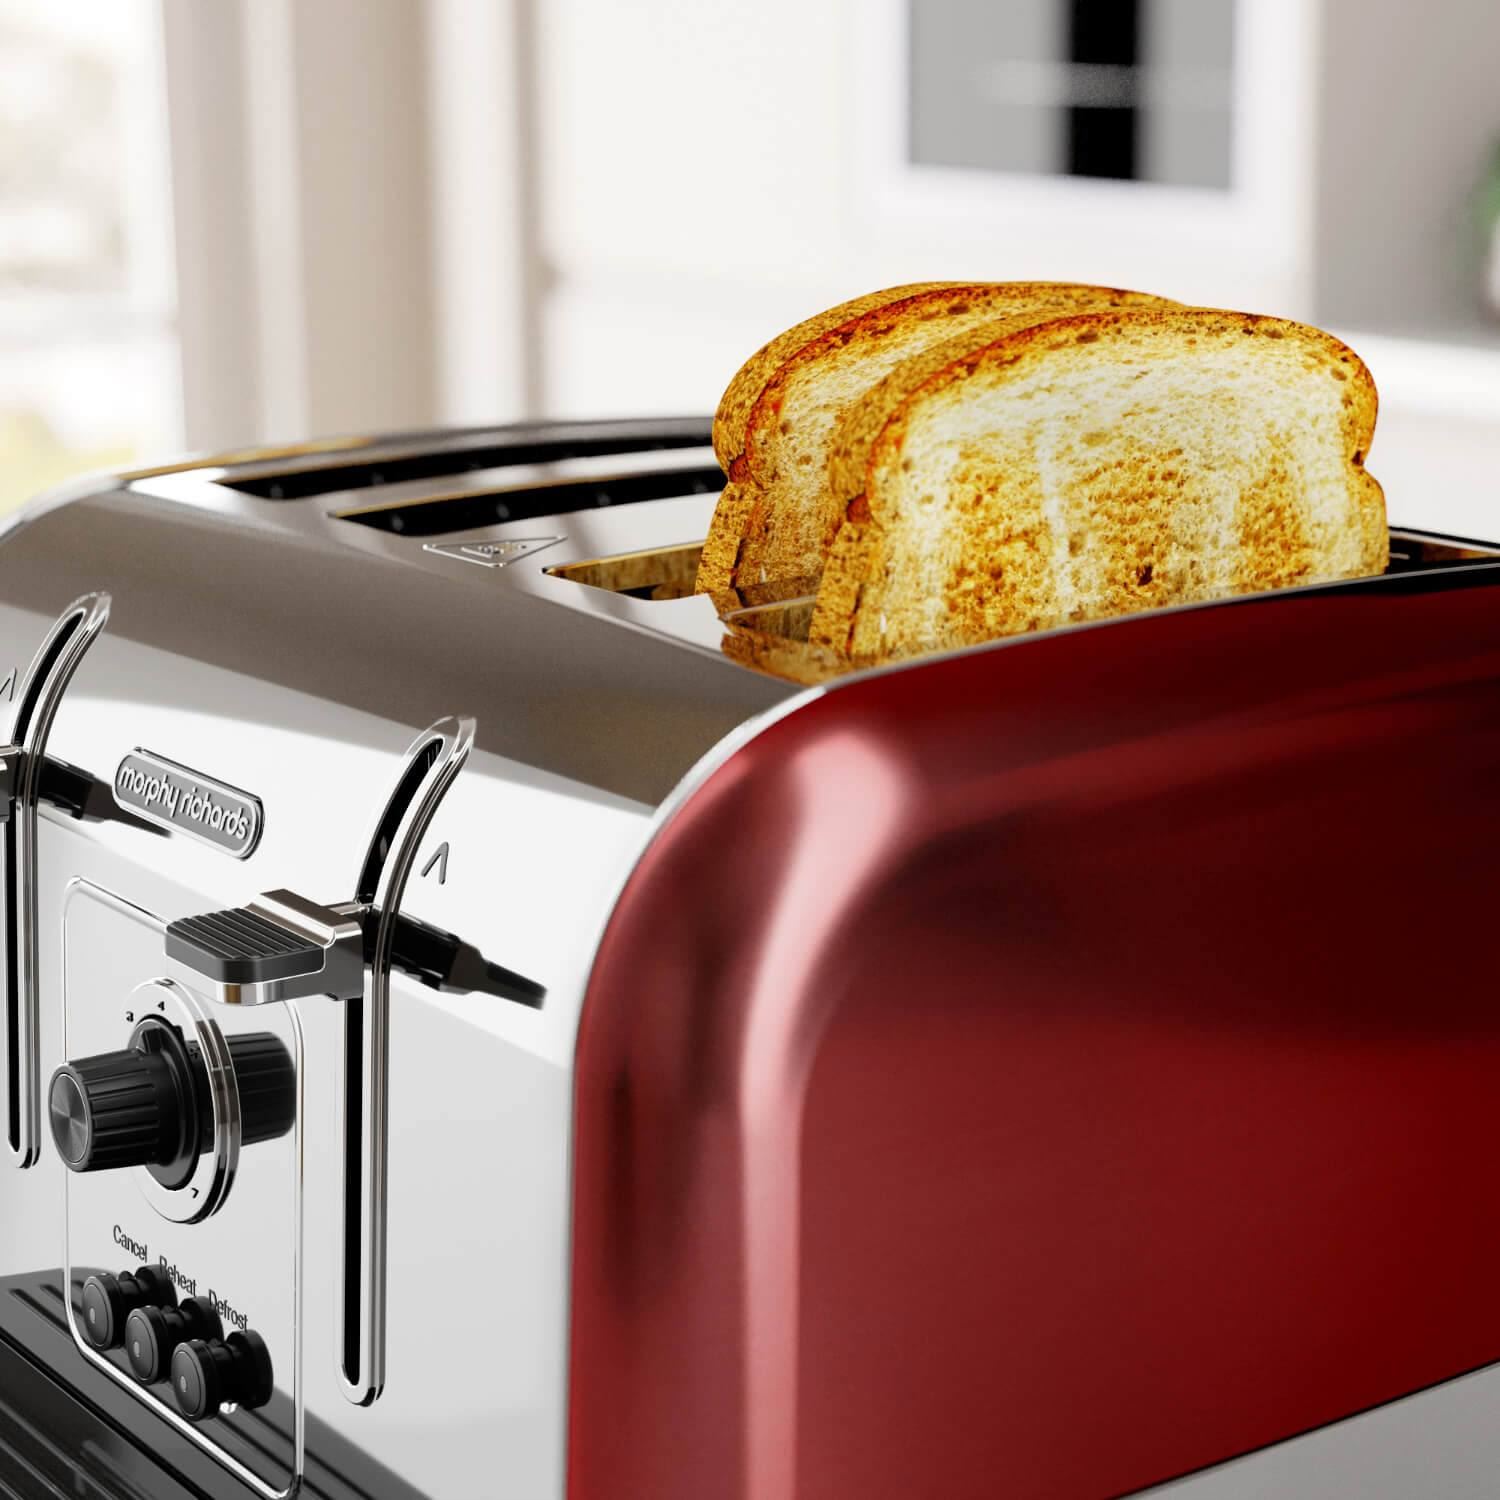 Morphy Richards Venture Red 4 Slice Toaster